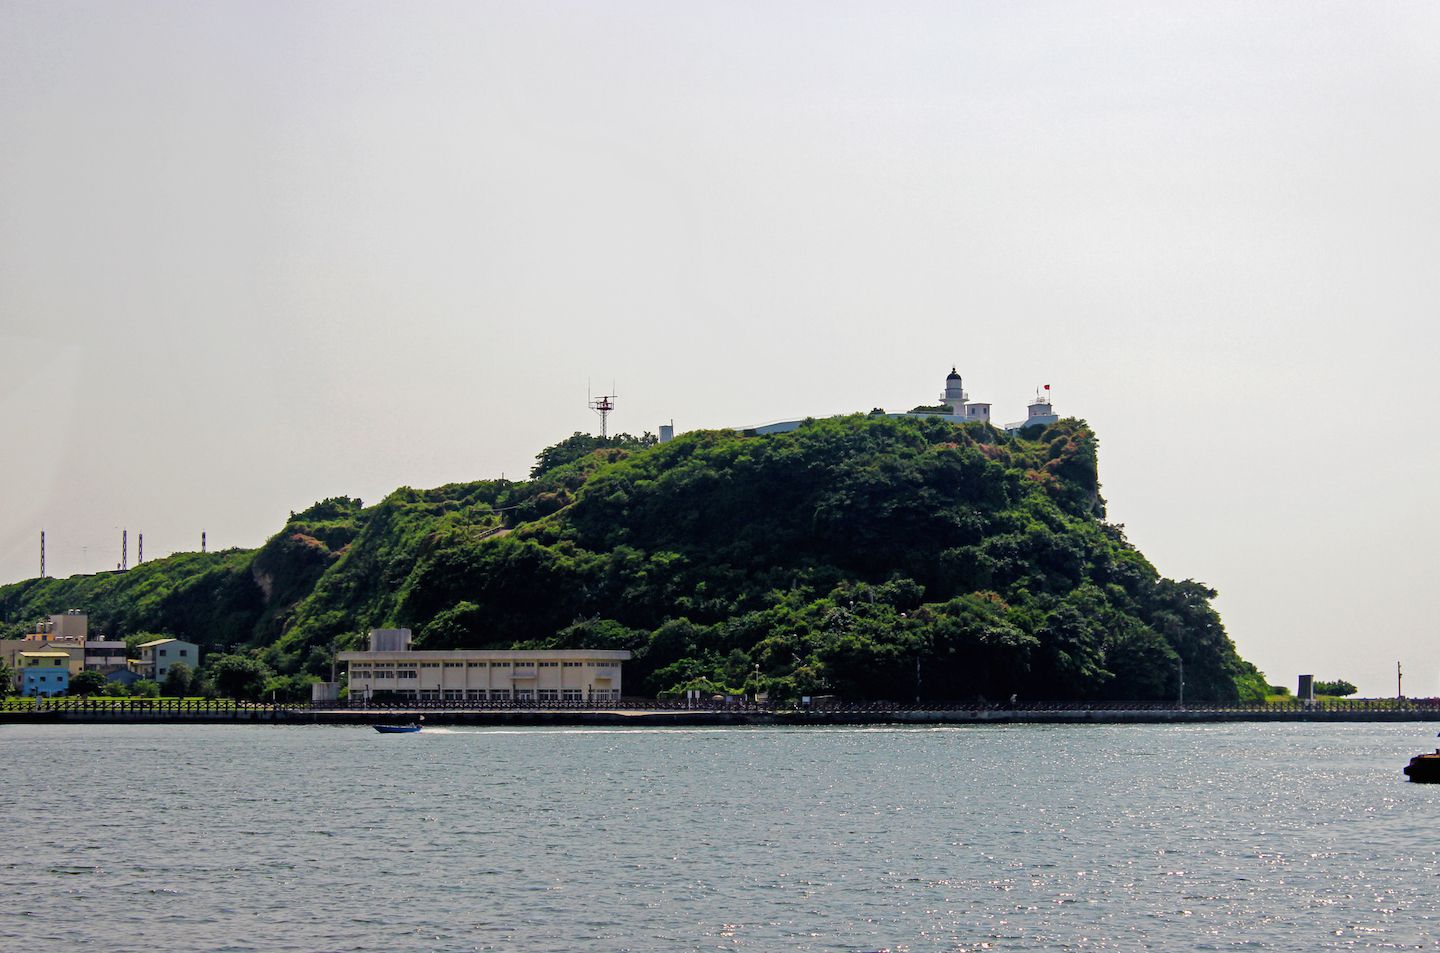 Cijin island